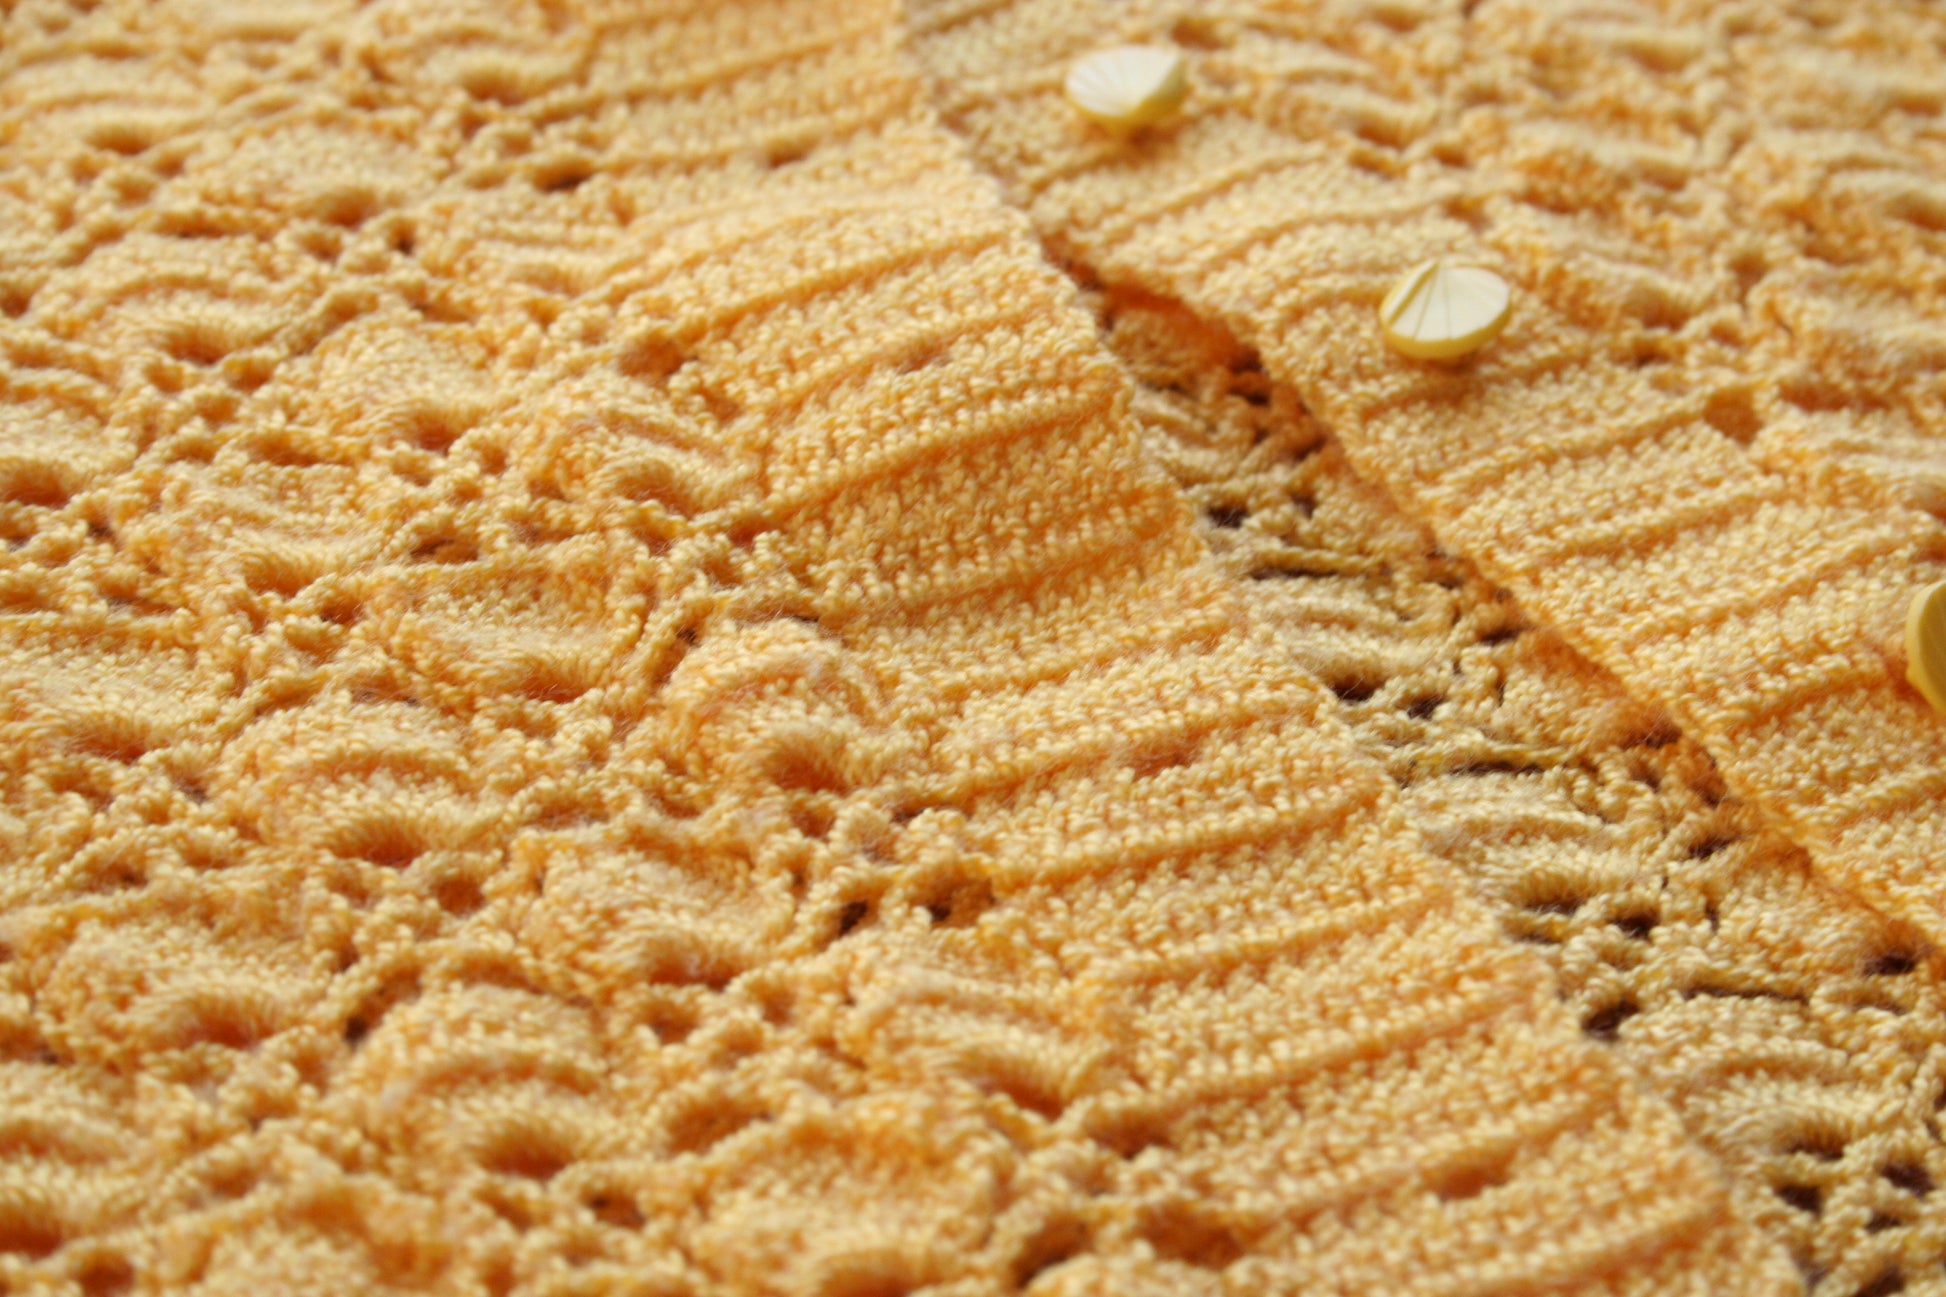 Detail of the crochet stitch pattern 